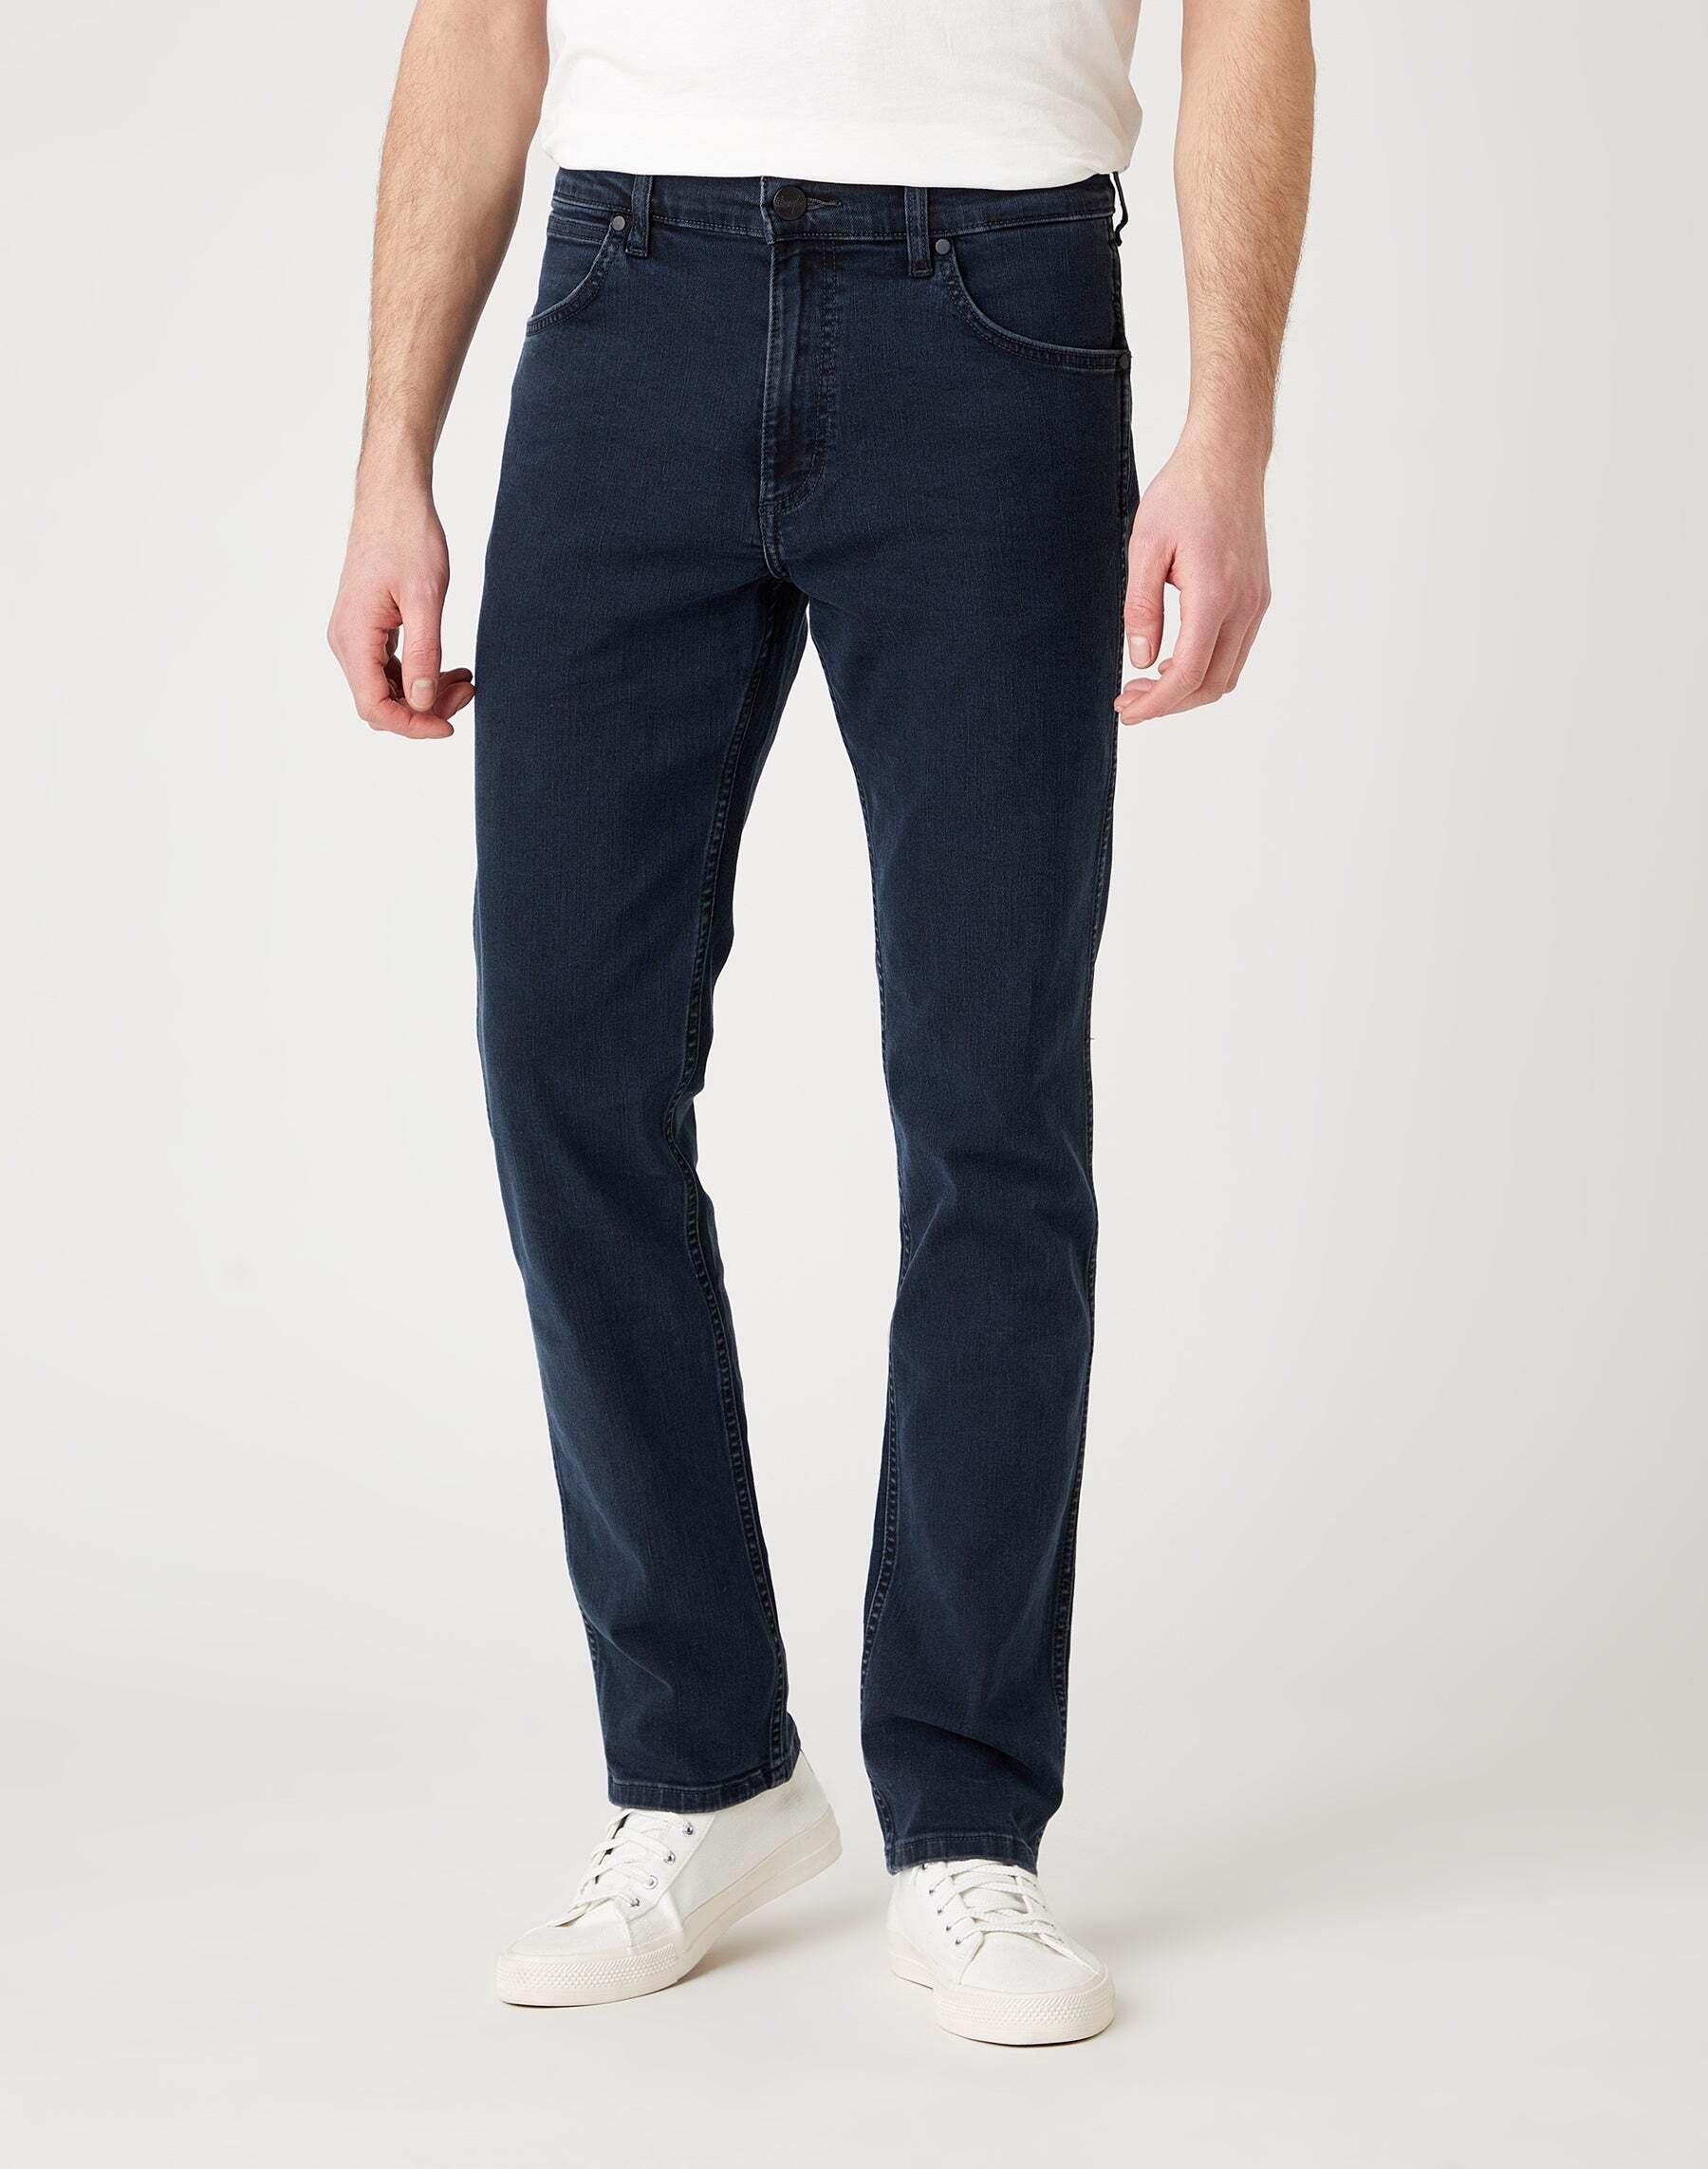 Jeans Straight Leg Greensboro Herren Blau Denim L34/W32 von Wrangler